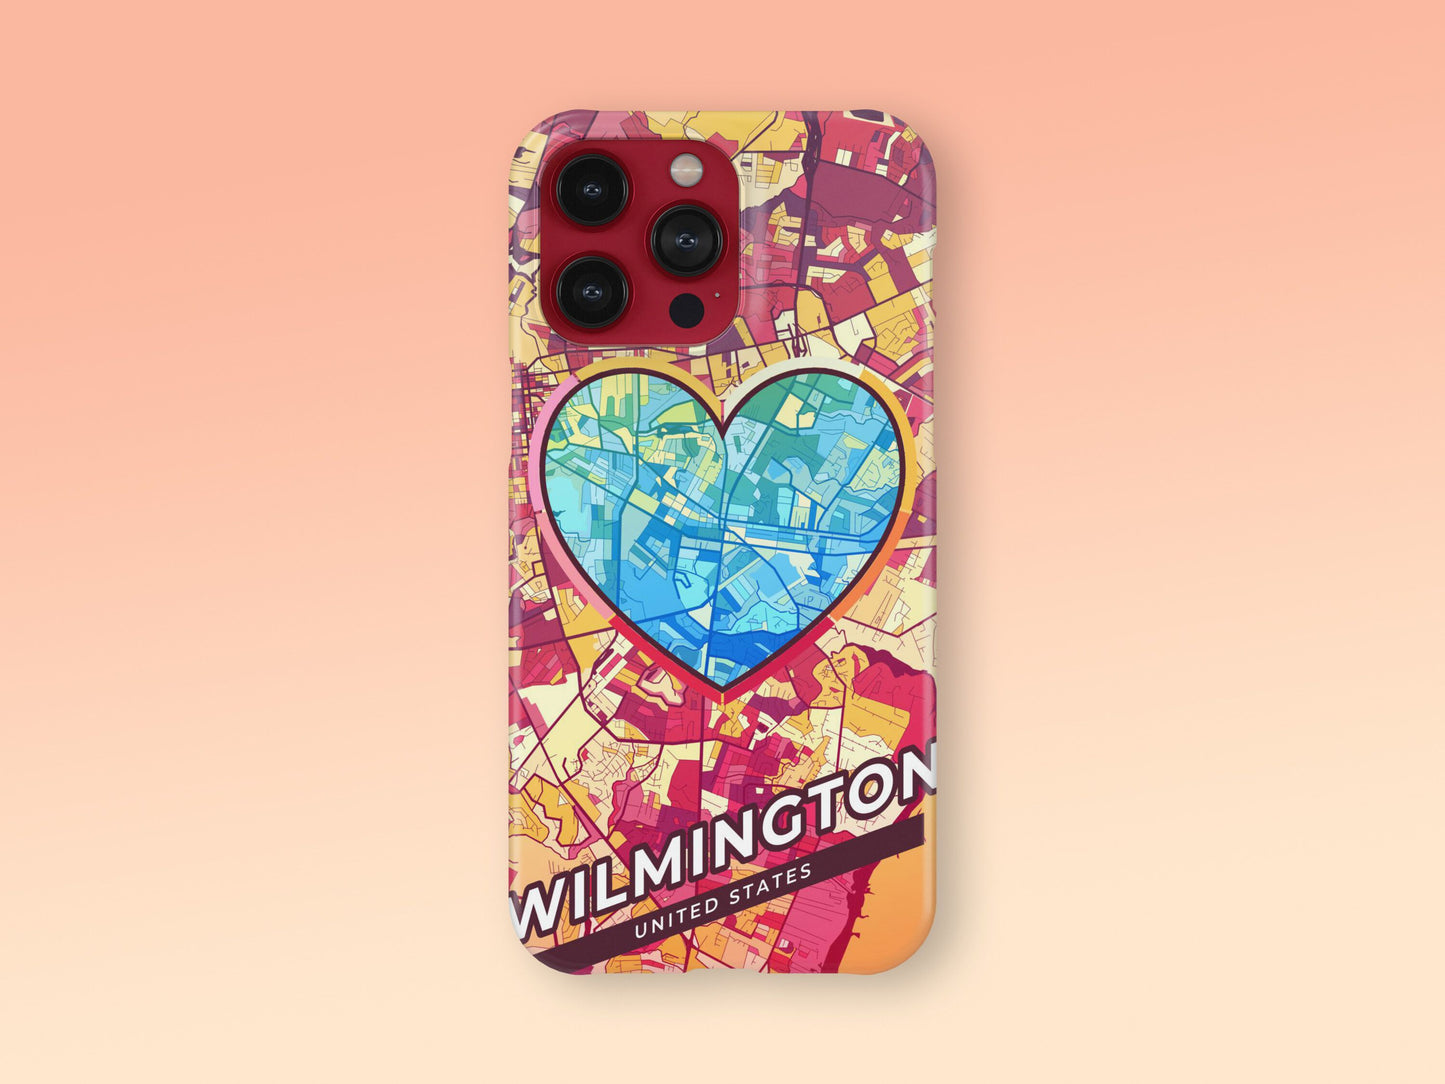 Wilmington North Carolina slim phone case with colorful icon 2